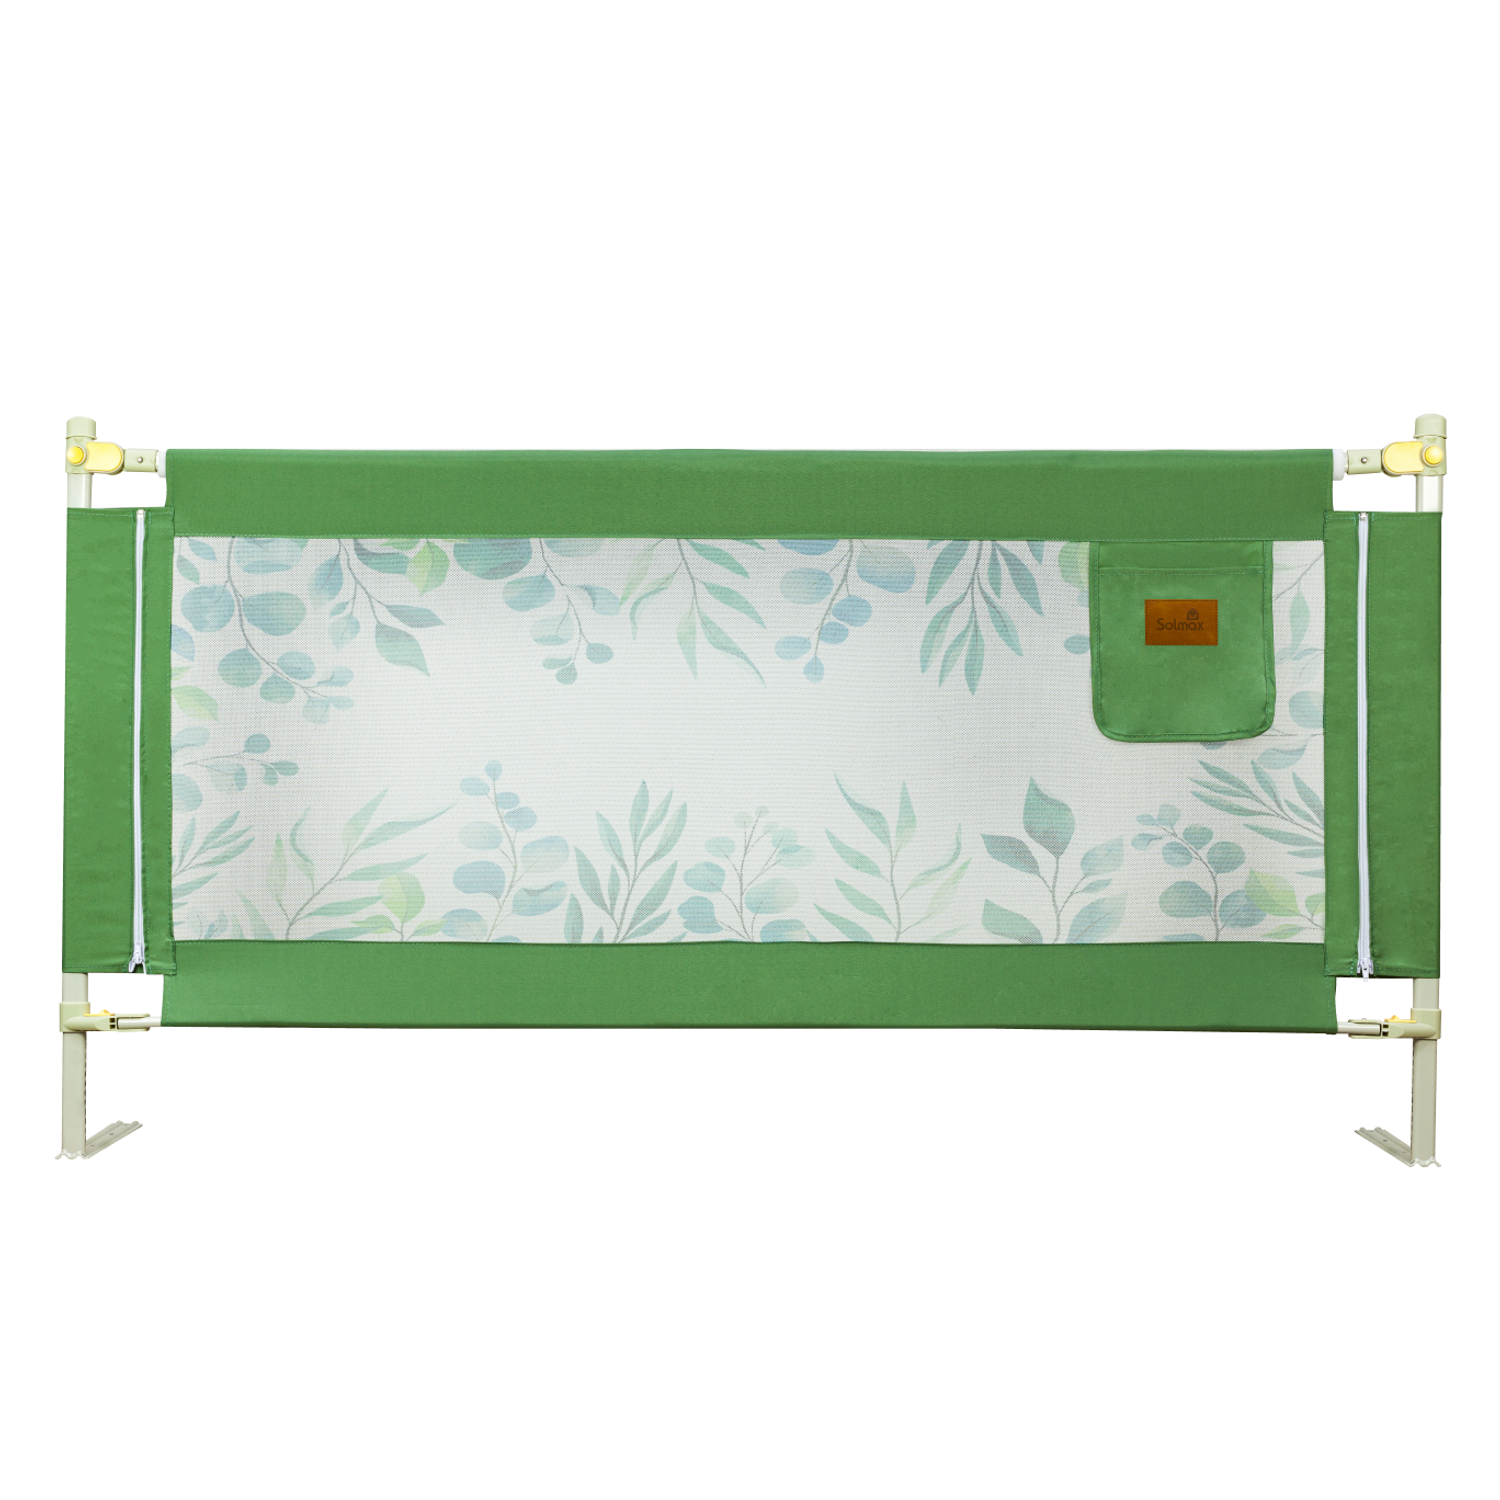 Барьер для кровати Solmax зеленый 200 см на одну сторону - фото 8